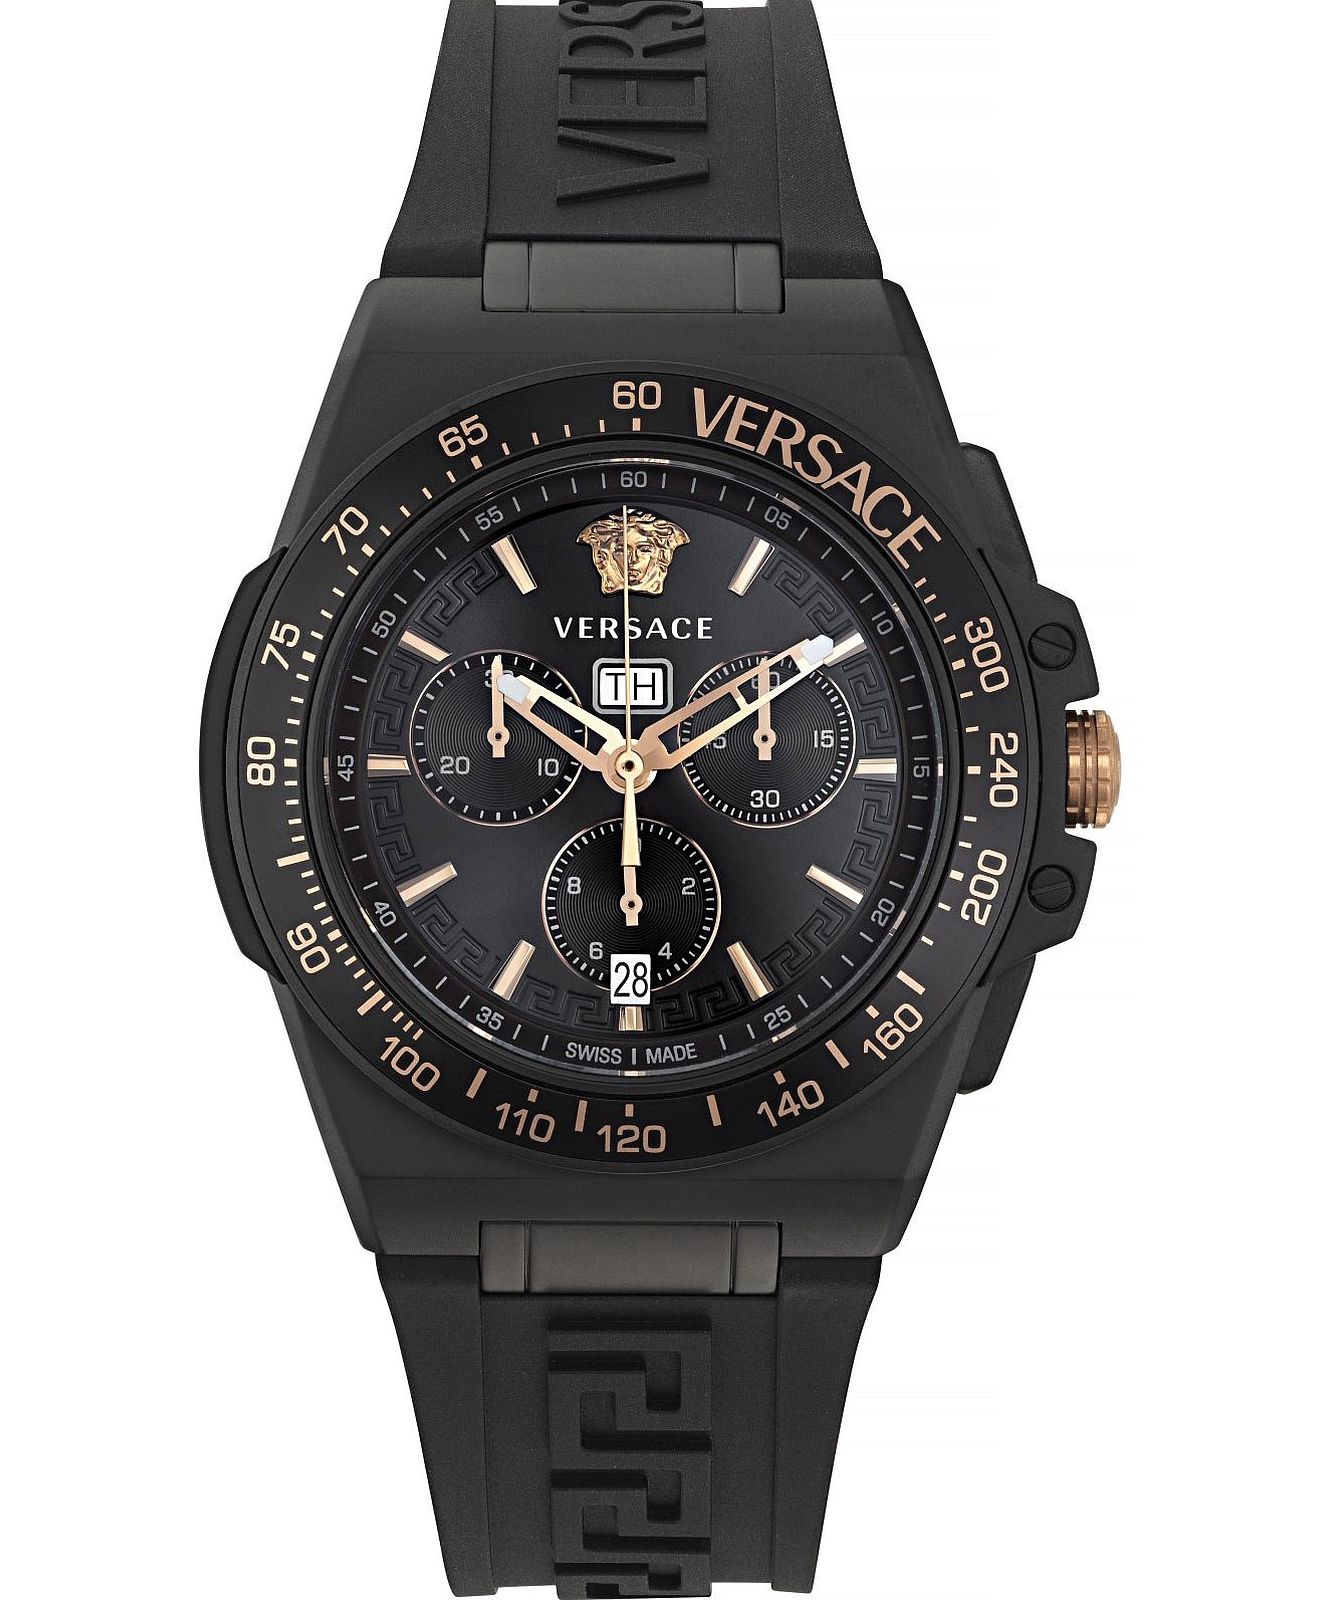 Versace VE7H00323 - Greca Extreme Chrono Watch •